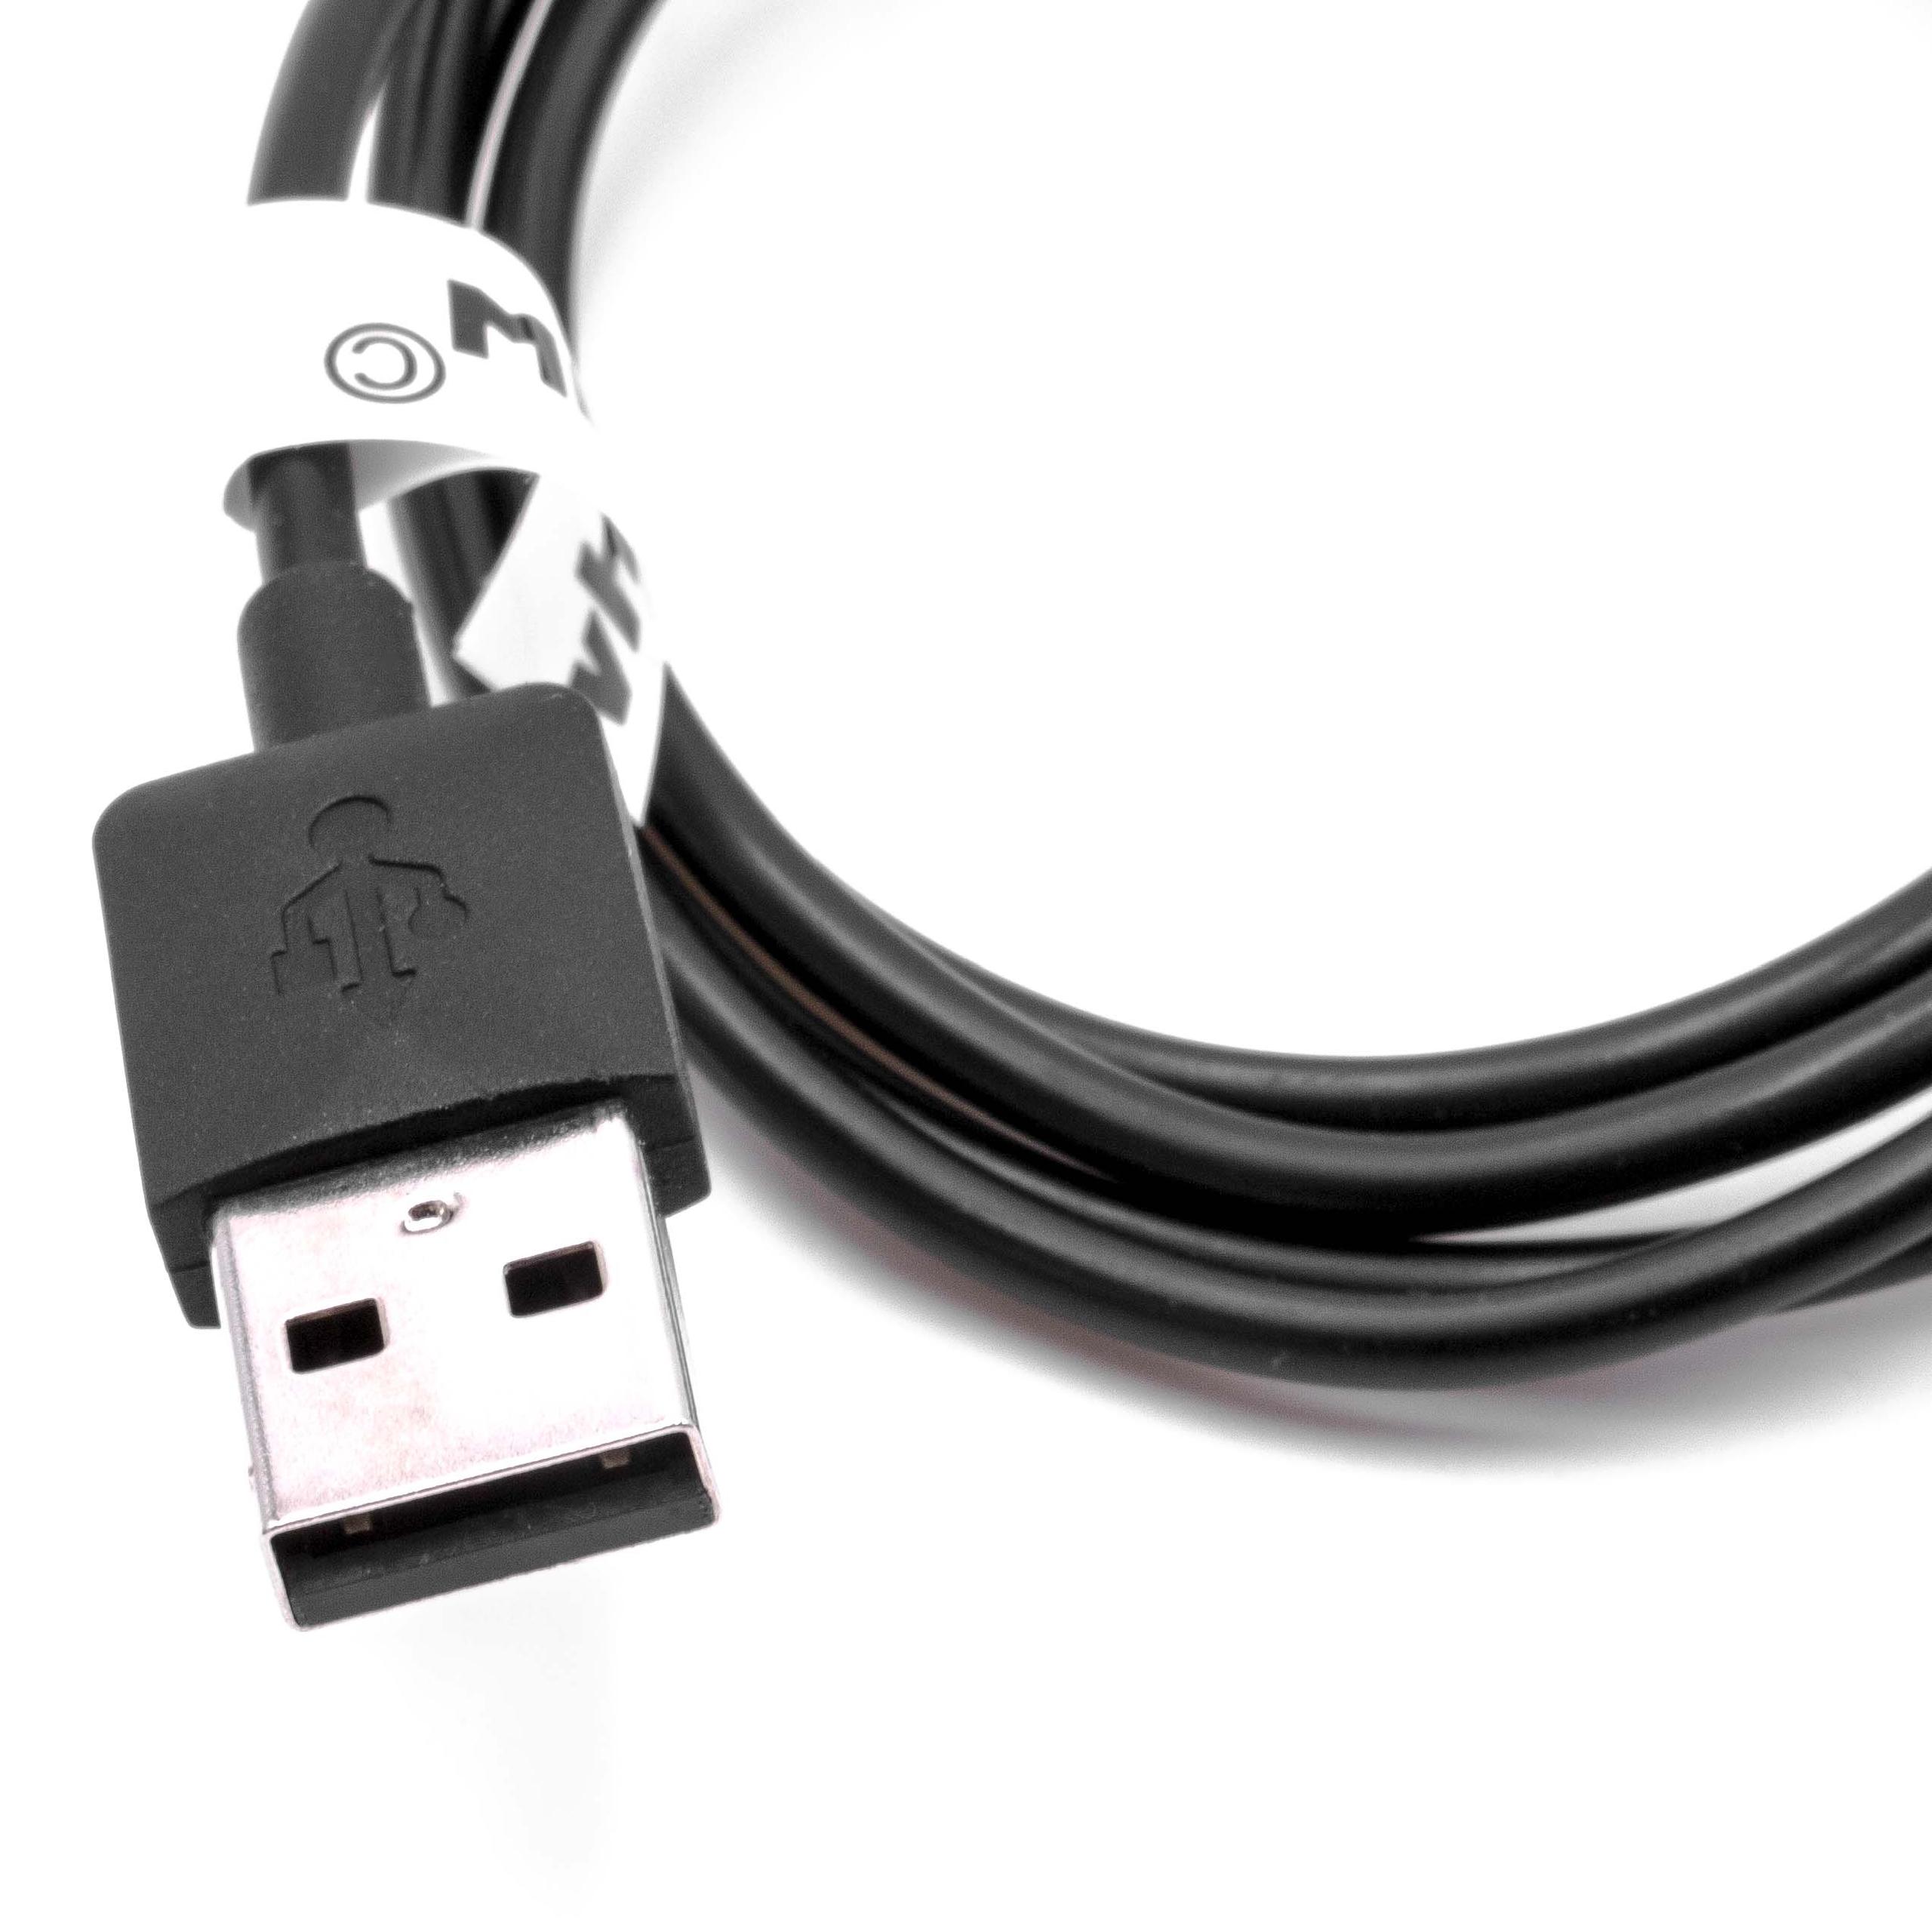 Cavo di ricarica USB per smartwatch Garmin Forerunner 205, 305 - nero 95 cm